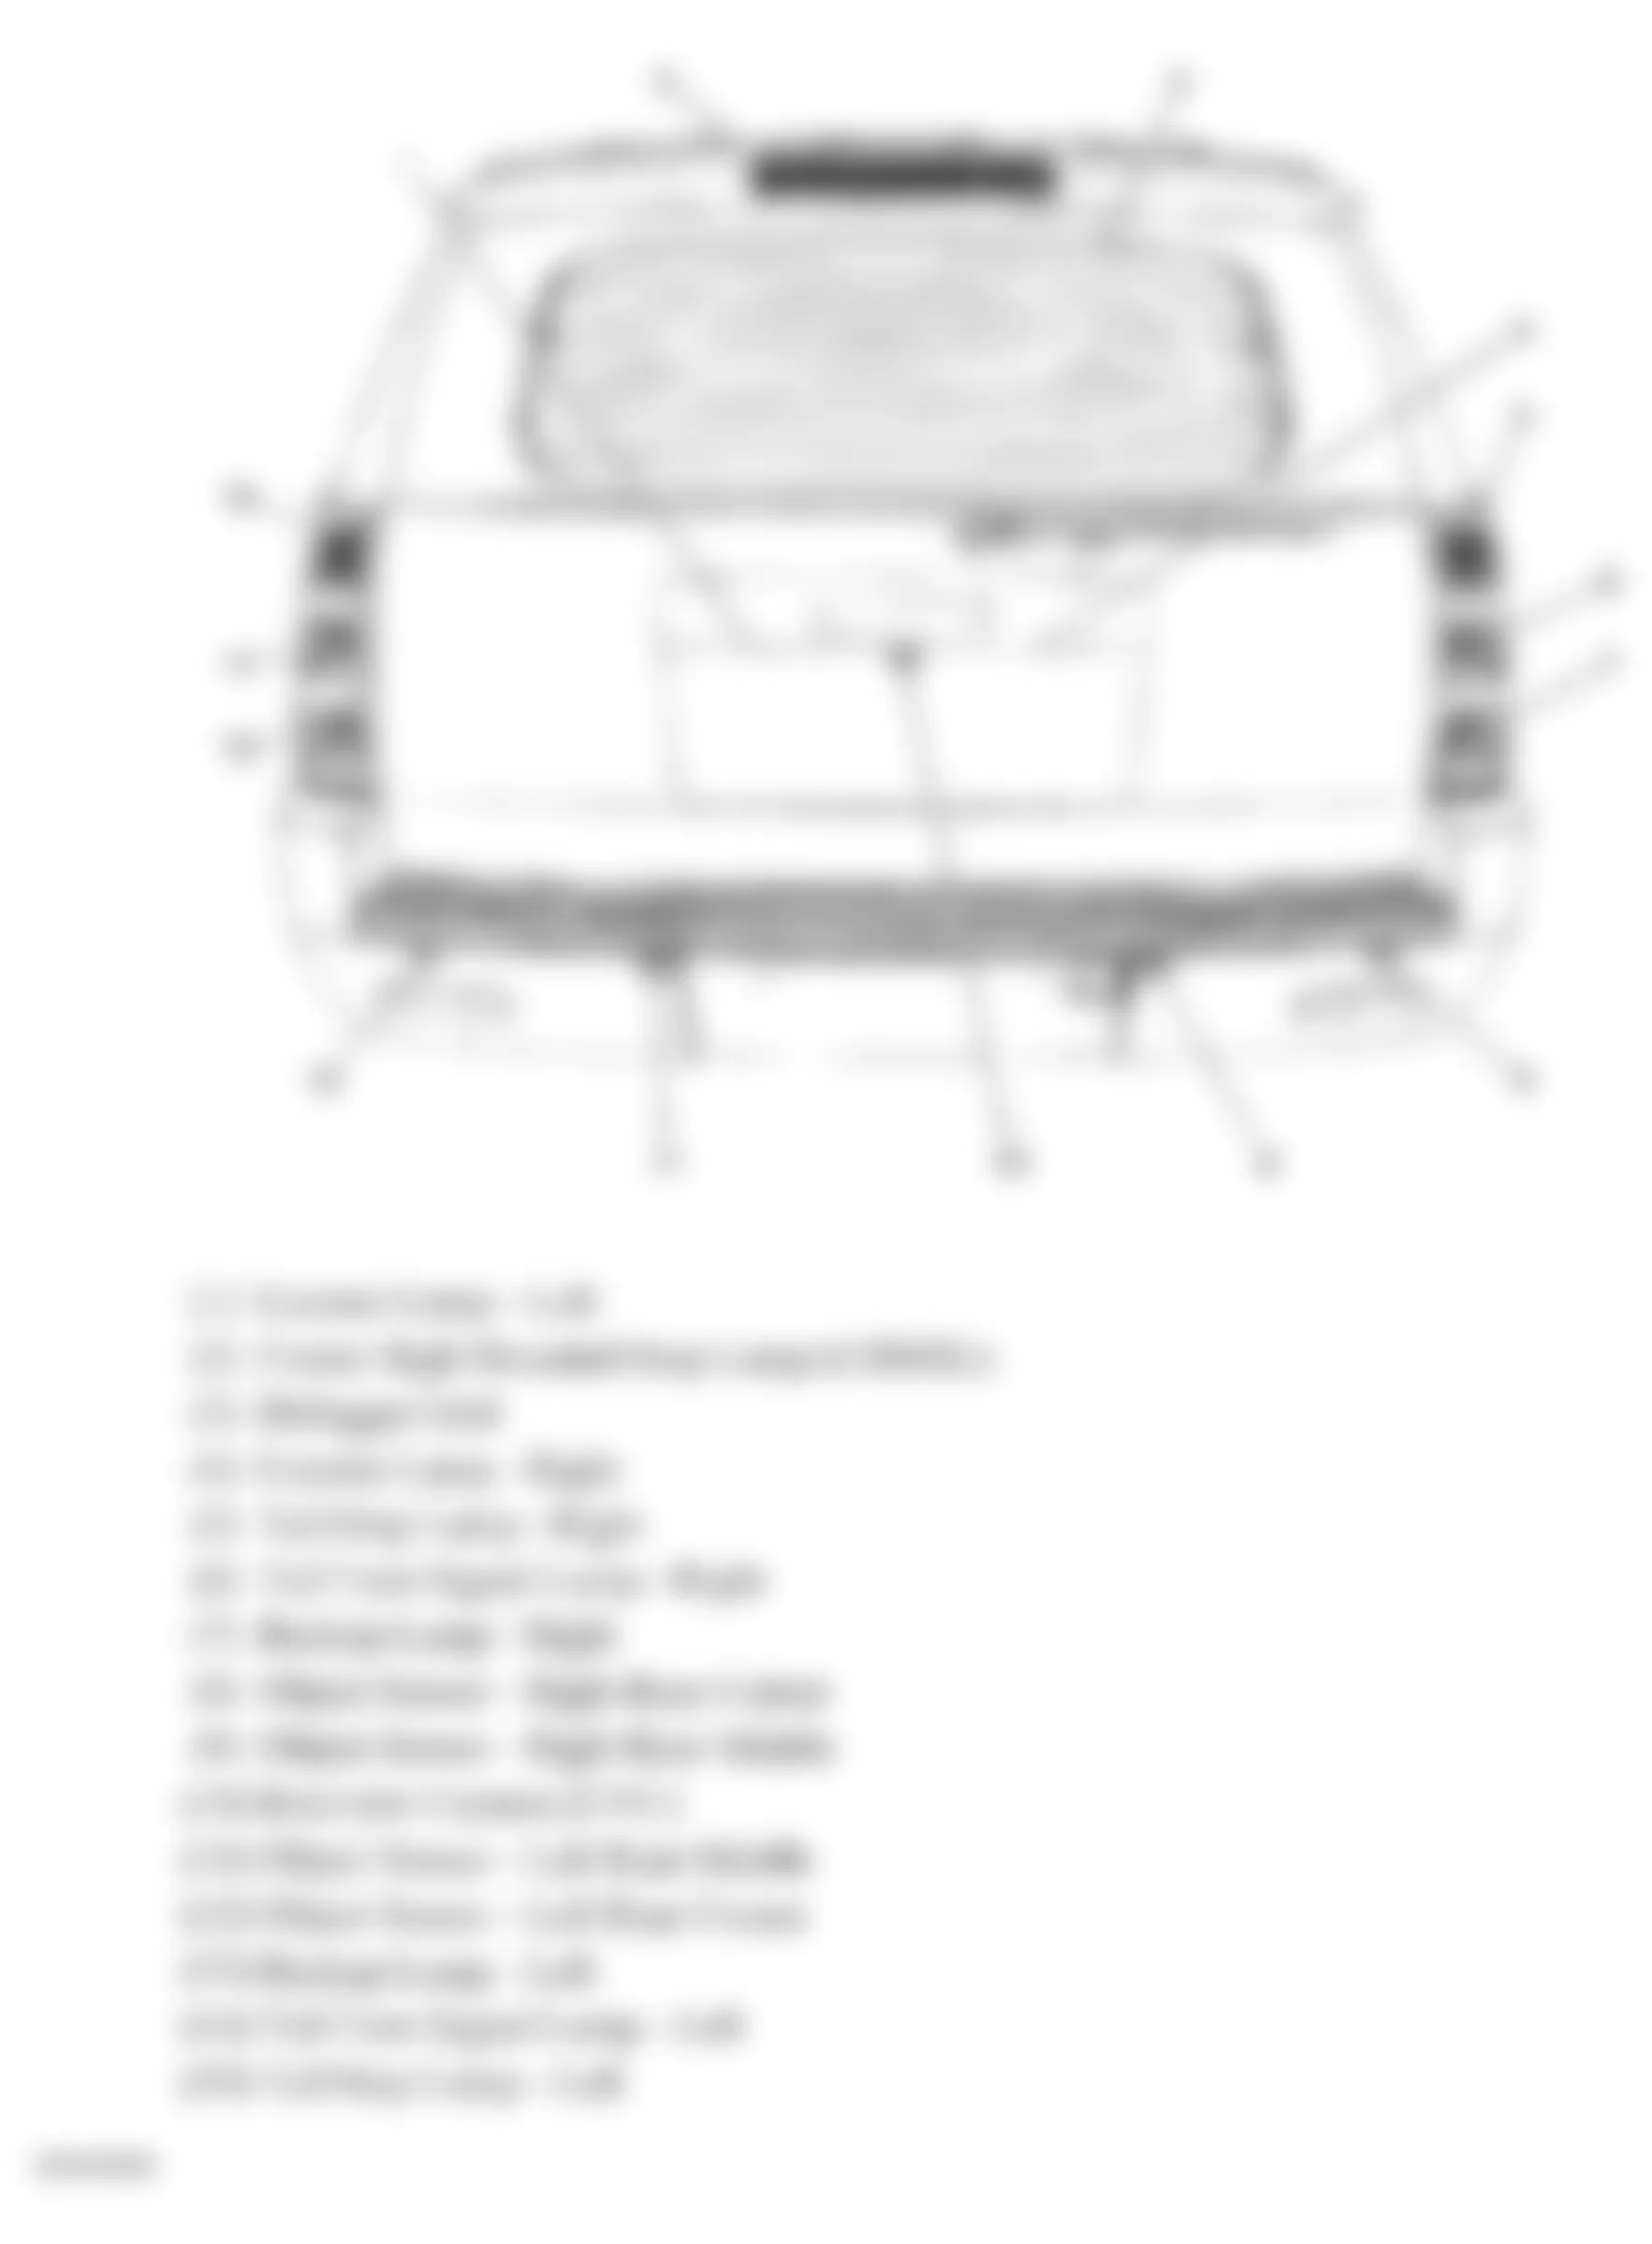 GMC Yukon Denali 2007 - Component Locations -  Rear Of Vehicle (Yukon W/One Piece Liftgate)